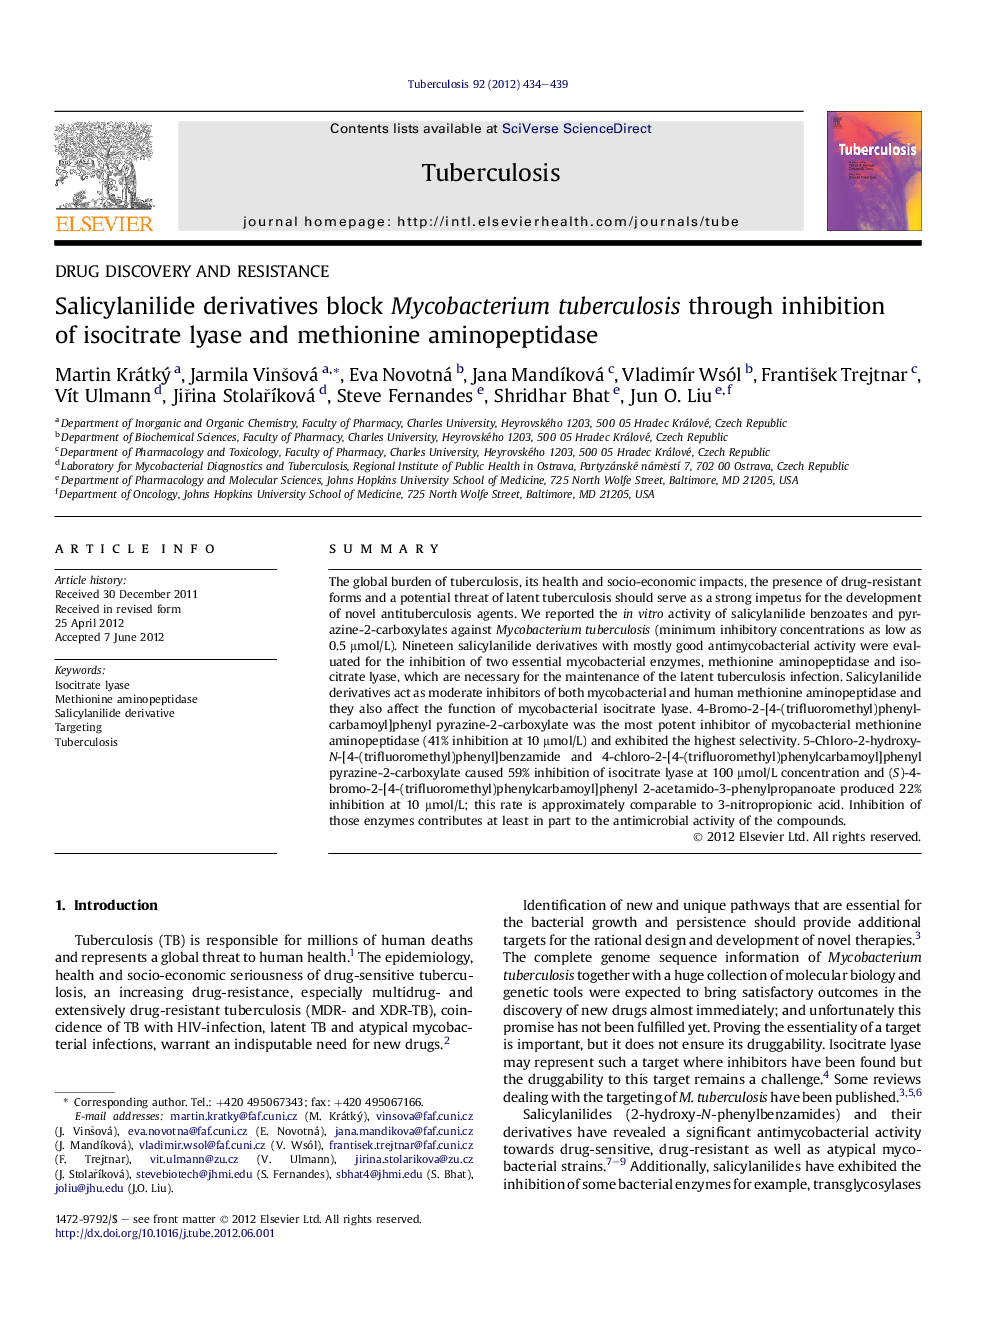 Salicylanilide derivatives block Mycobacterium tuberculosis through inhibition of isocitrate lyase and methionine aminopeptidase